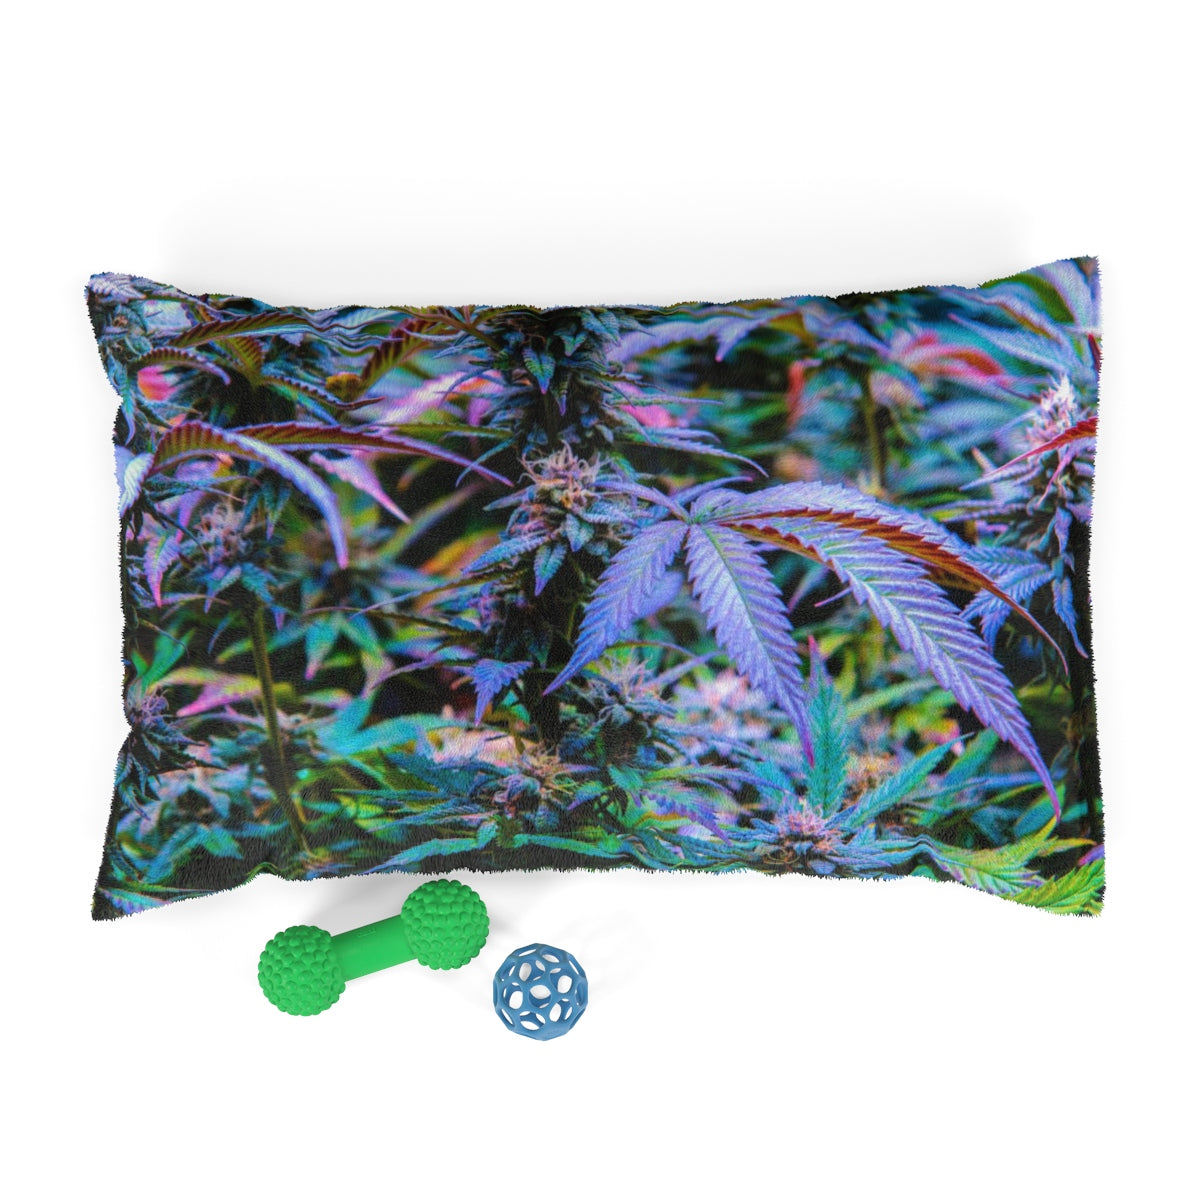 The Rainbow Cannabis Pet Bed